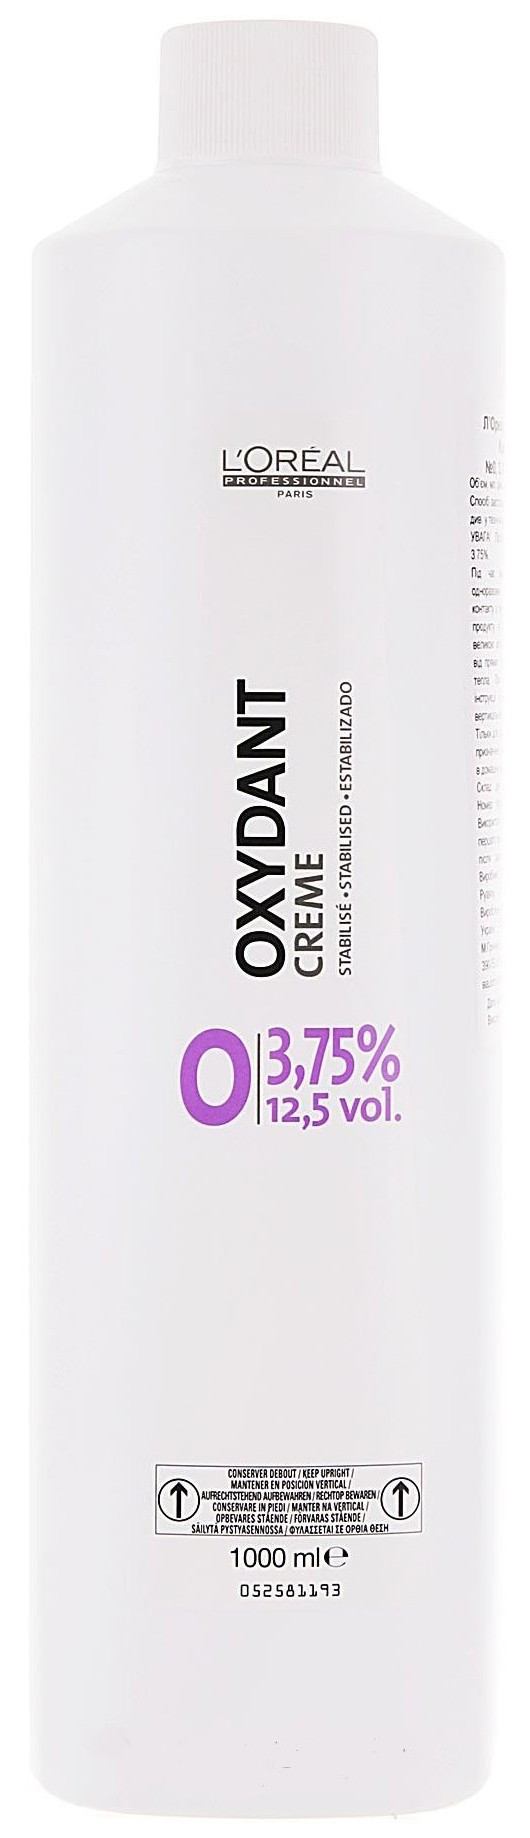 Проявитель L'Oreal Professionnel Oxydant Creame 3,75% 1000 мл l’oreal professionnel проявитель 1 8% 6vol диа 1000 мл